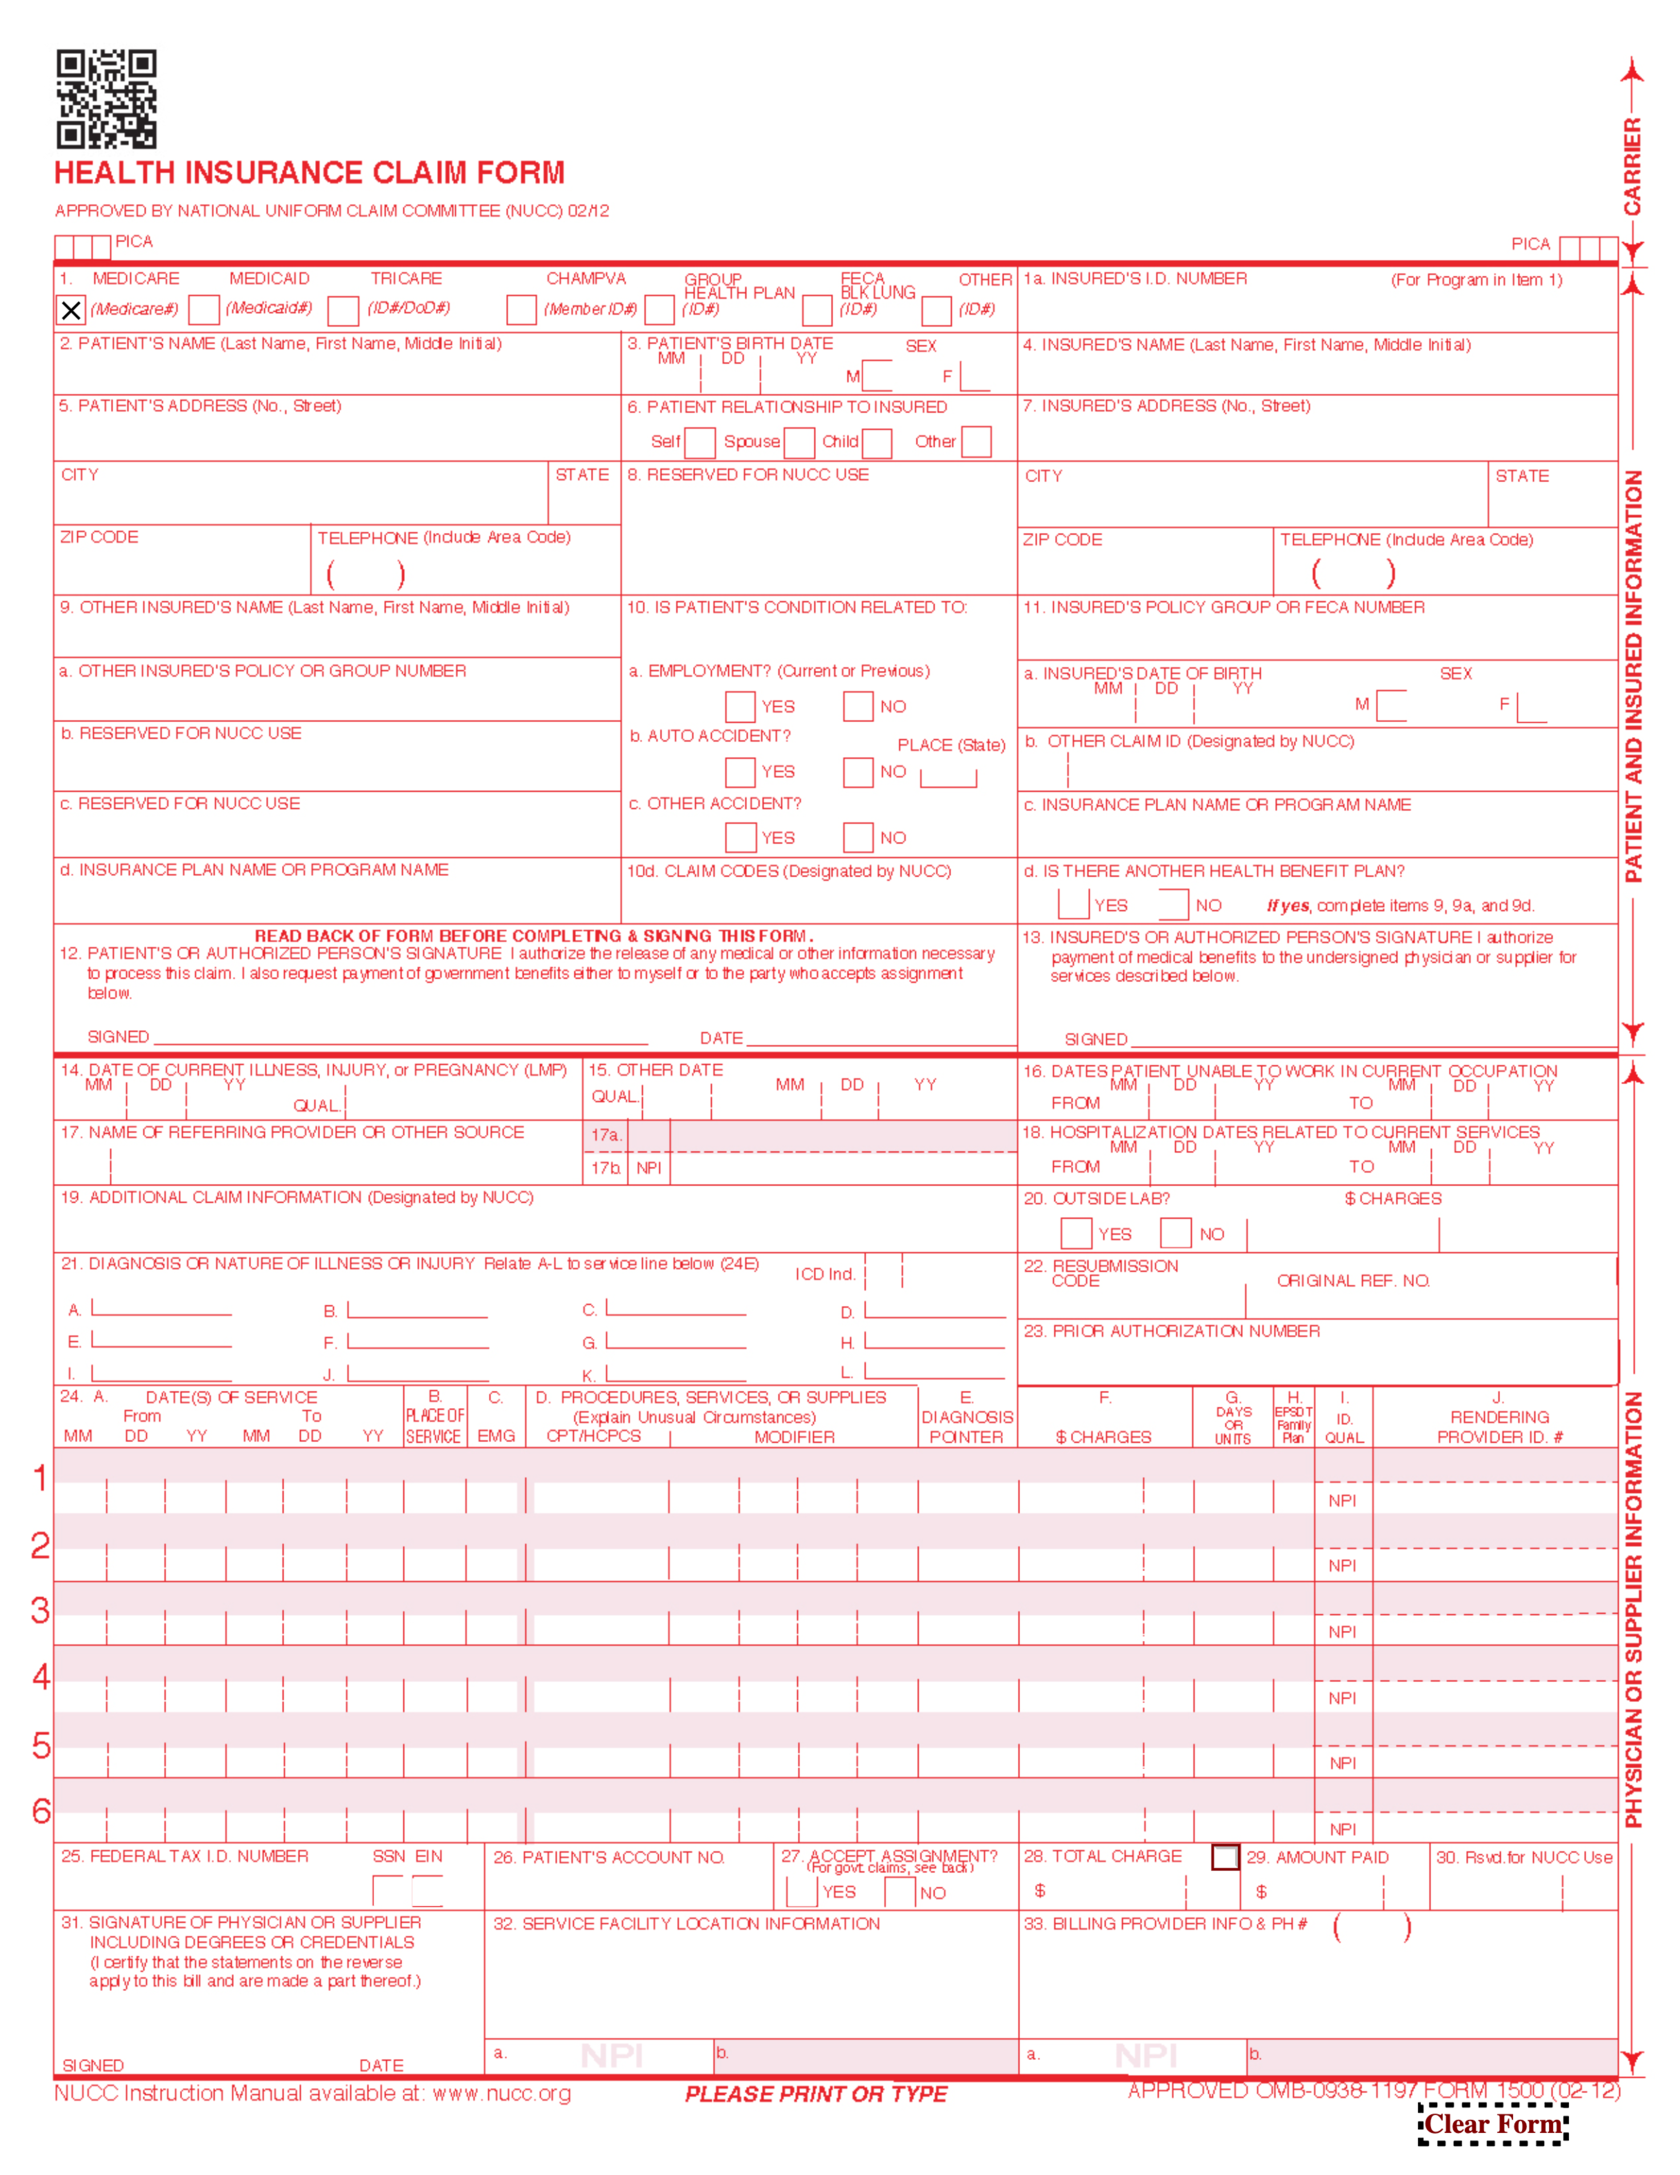 Fillable CMS 1500 Health Insurance Claim Form on PDFLiner